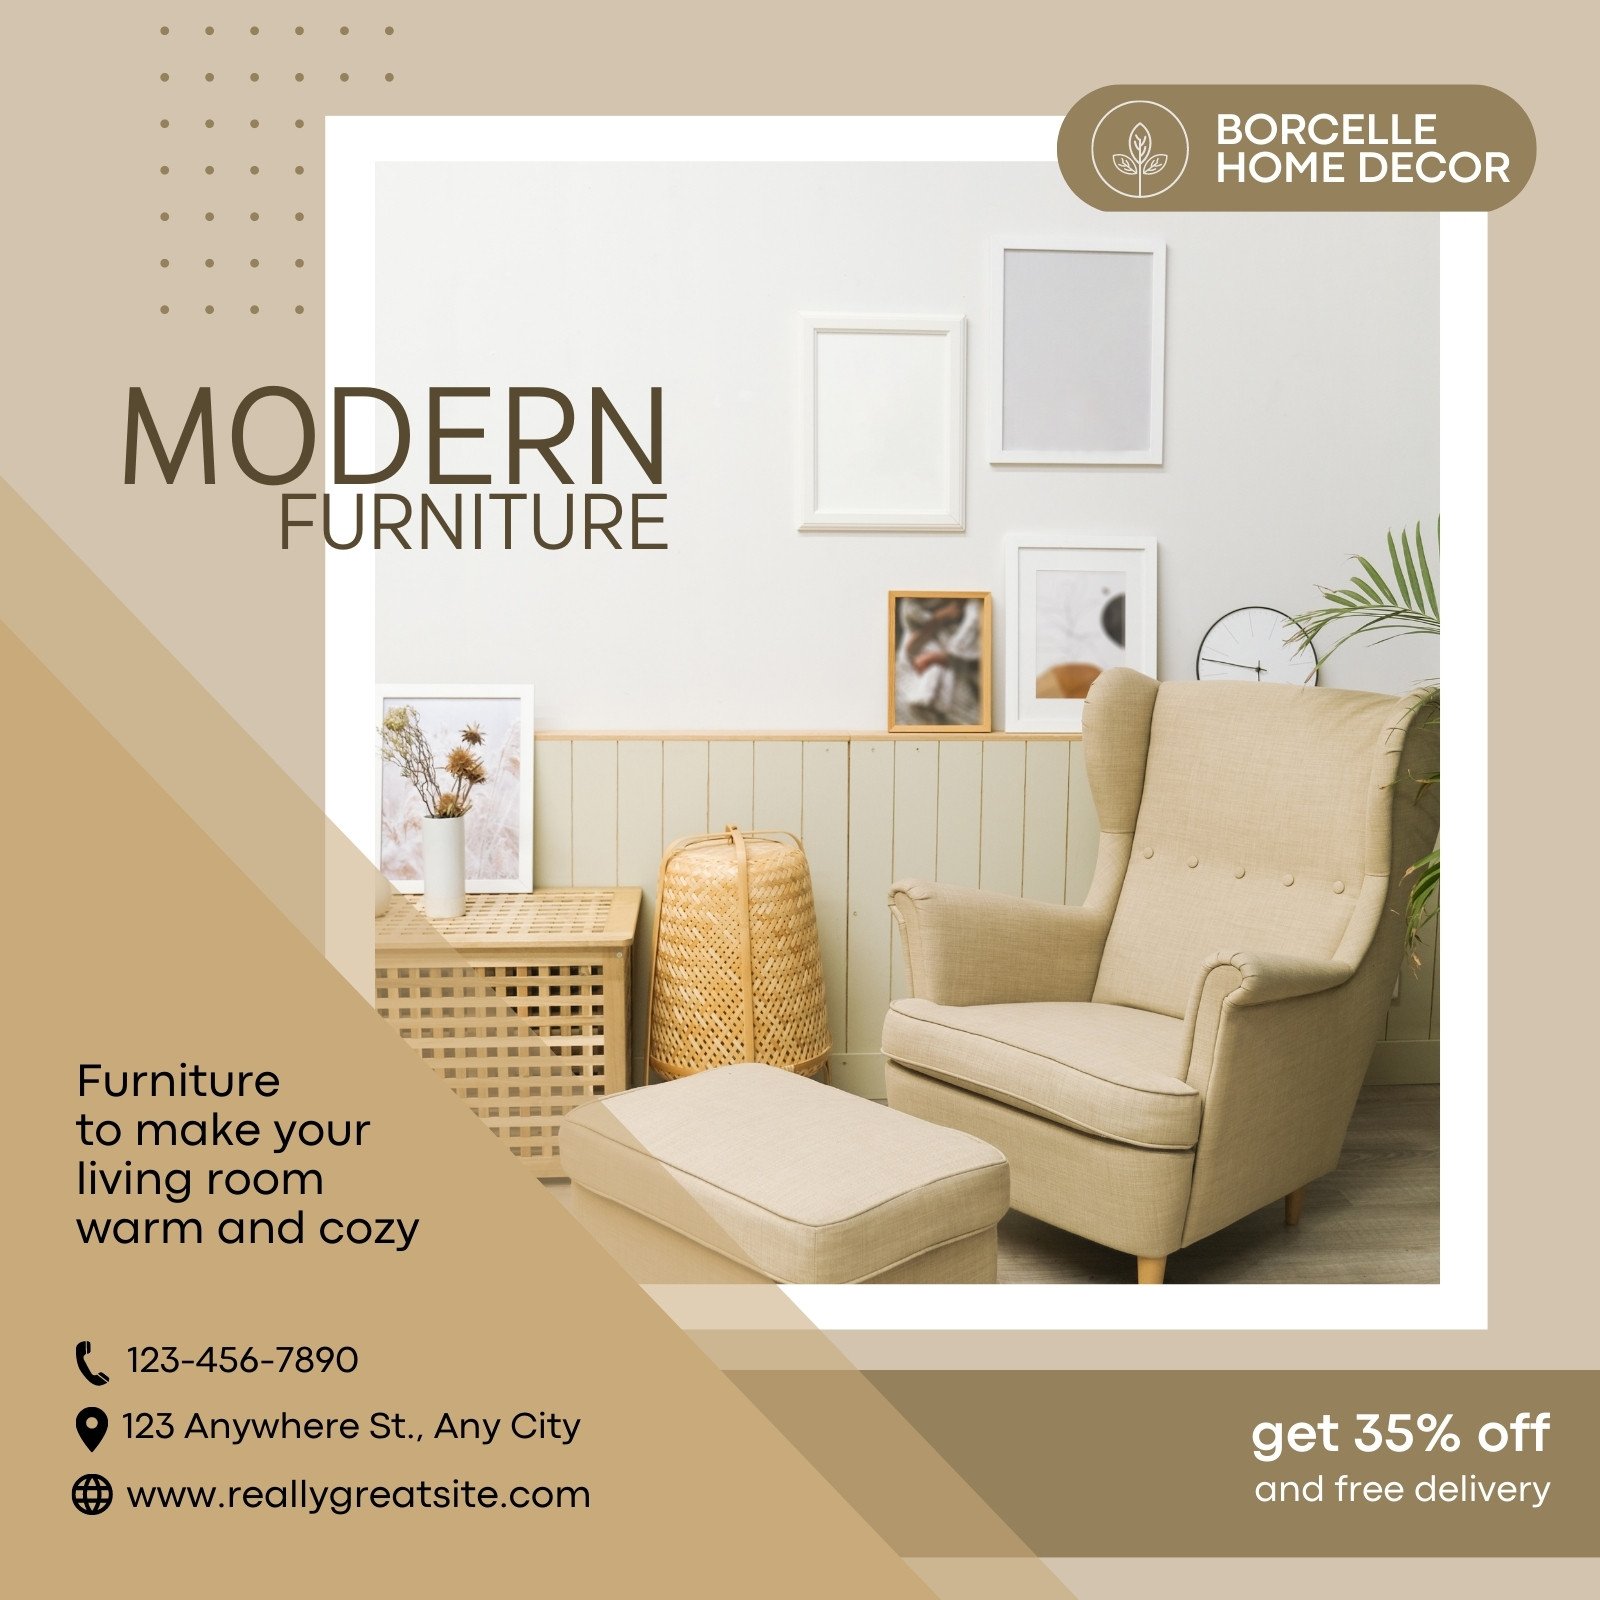 https://marketplace.canva.com/EAFerYGagy0/1/0/1600w/canva-brown-minimalist-modern-furniture-instagram-post-_dK5mcPBPQE.jpg